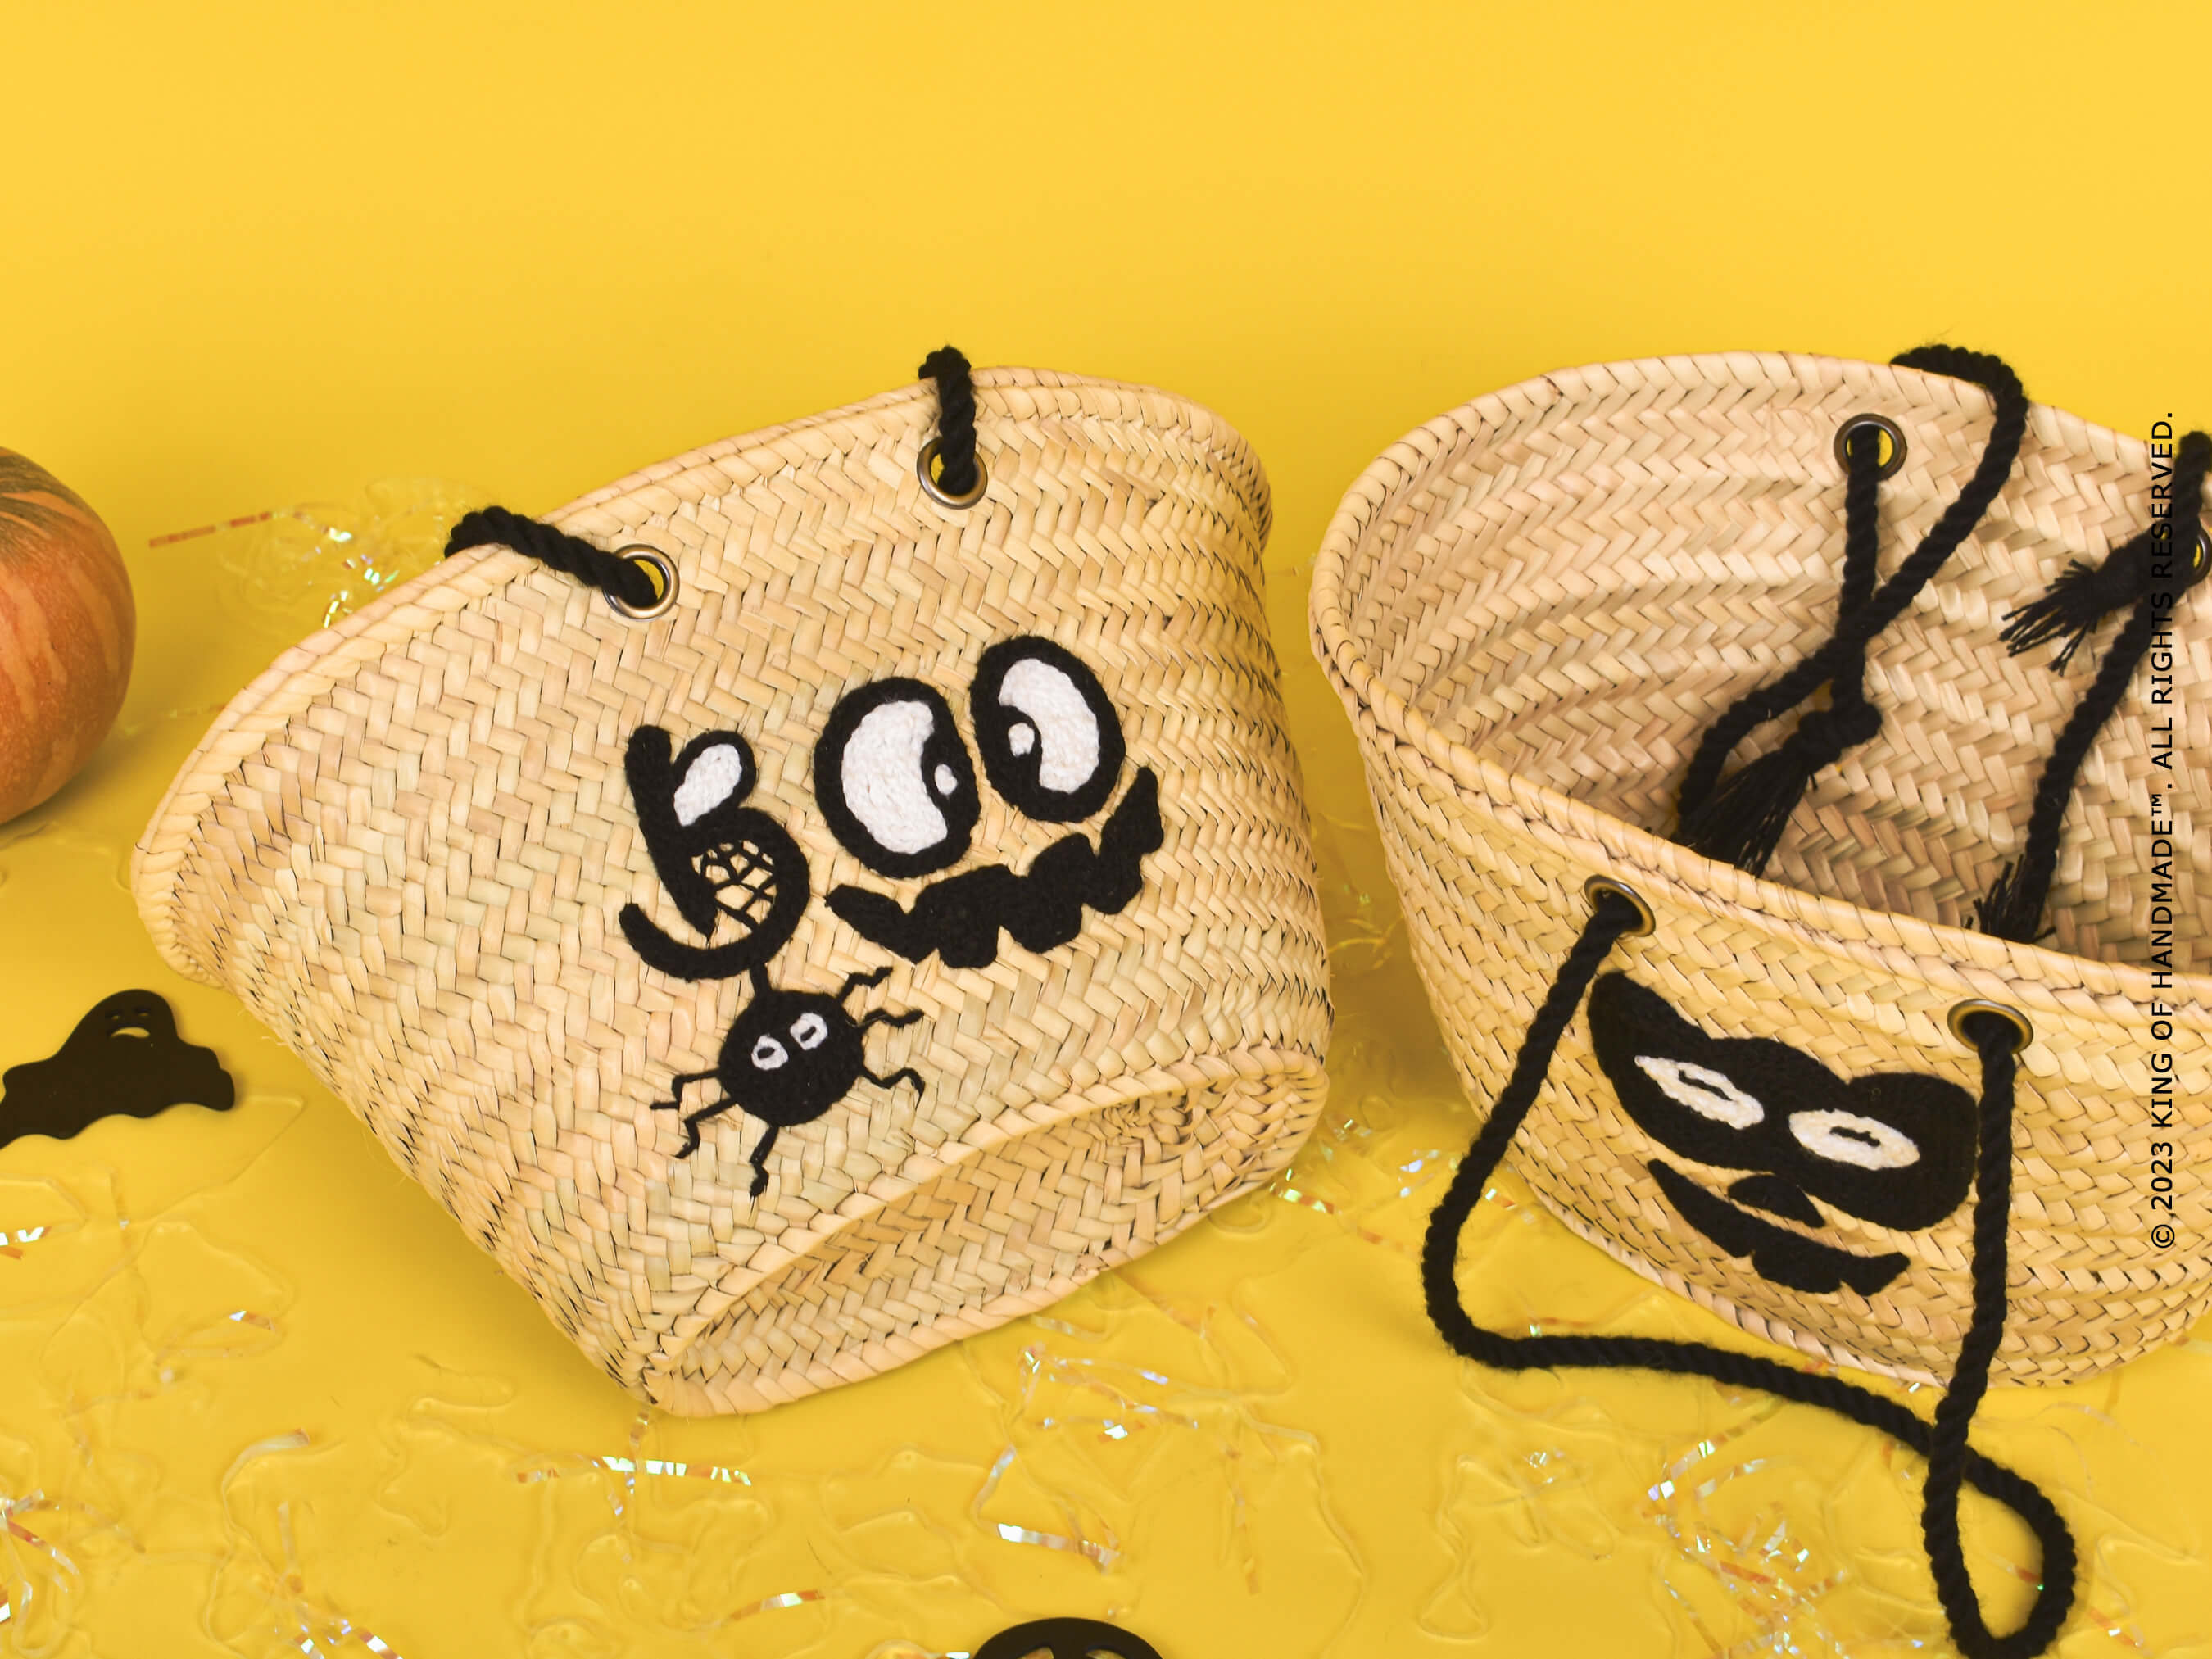 Boo ! Crew Halloween bag - Candy Basket